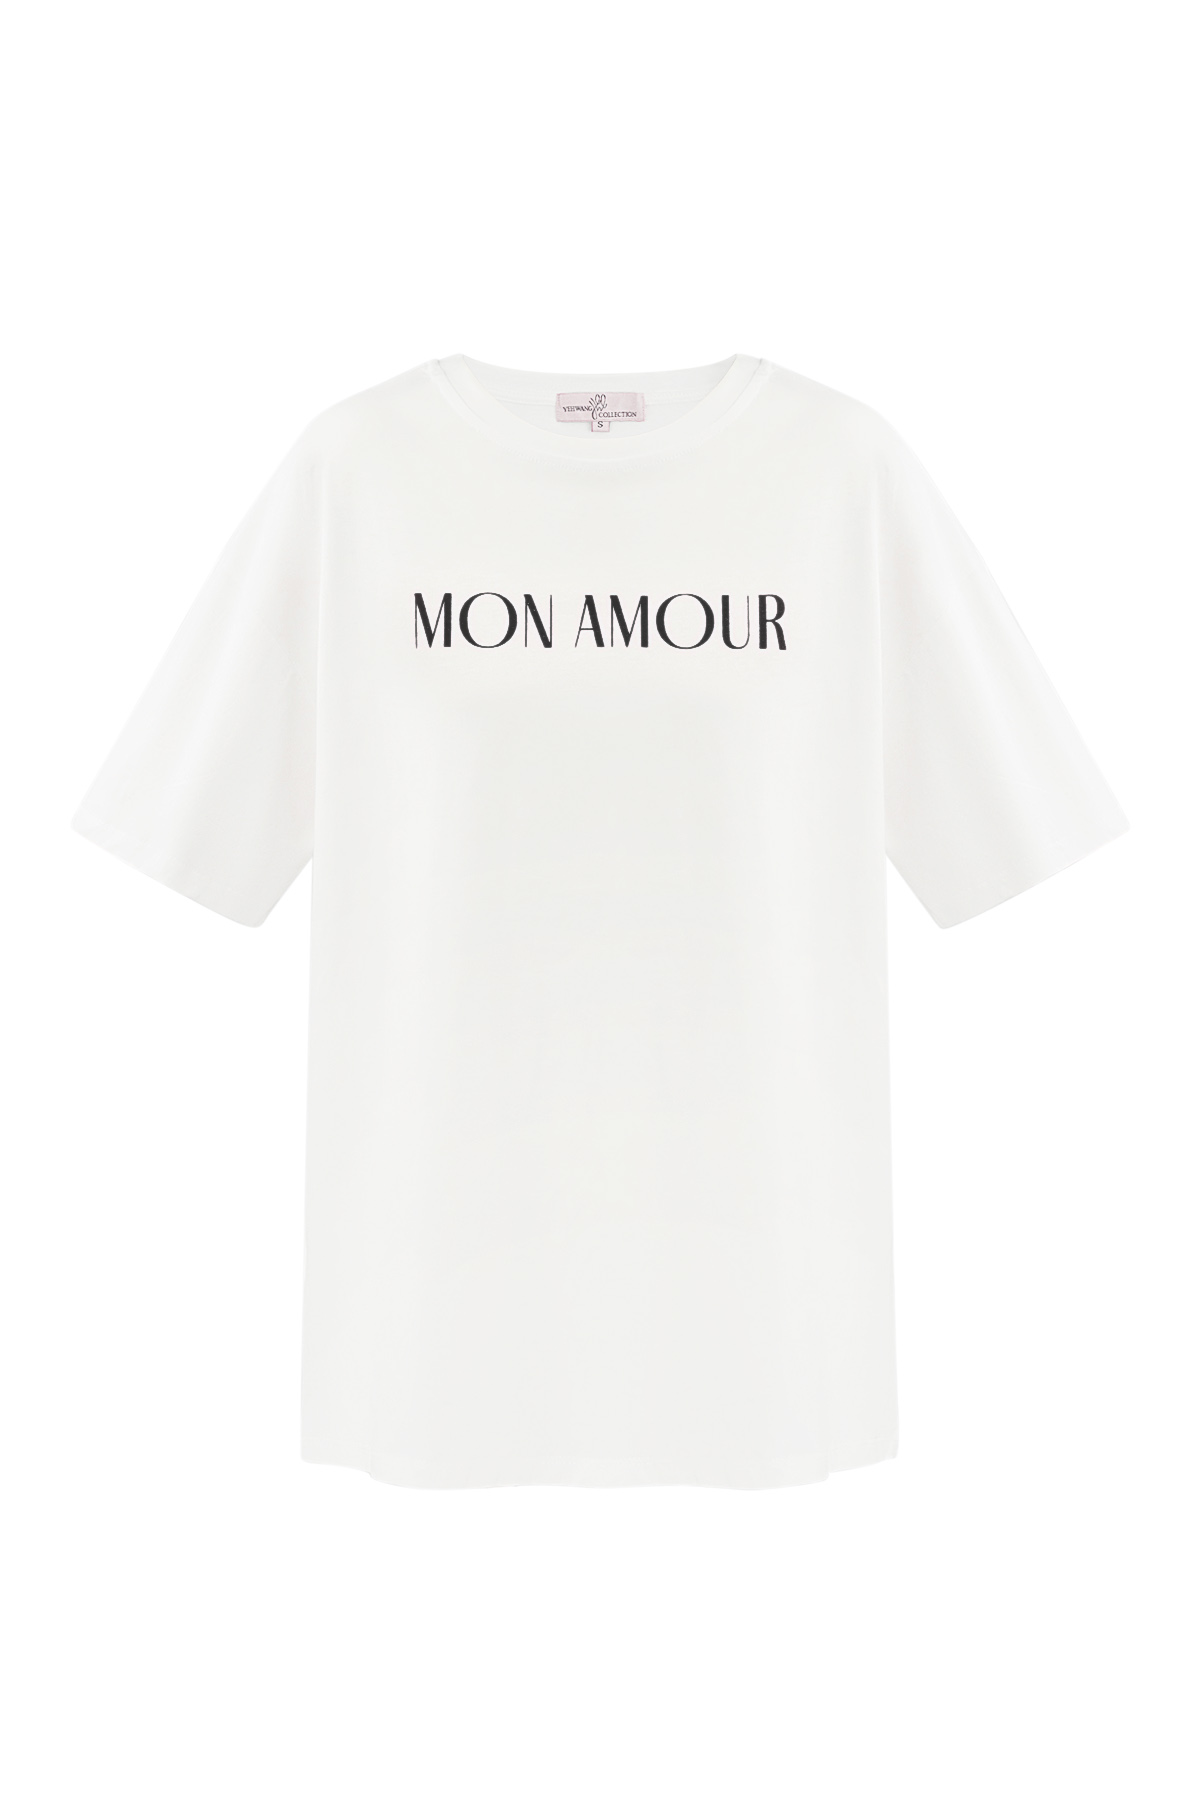 T-shirt mon amour - bianca e nera